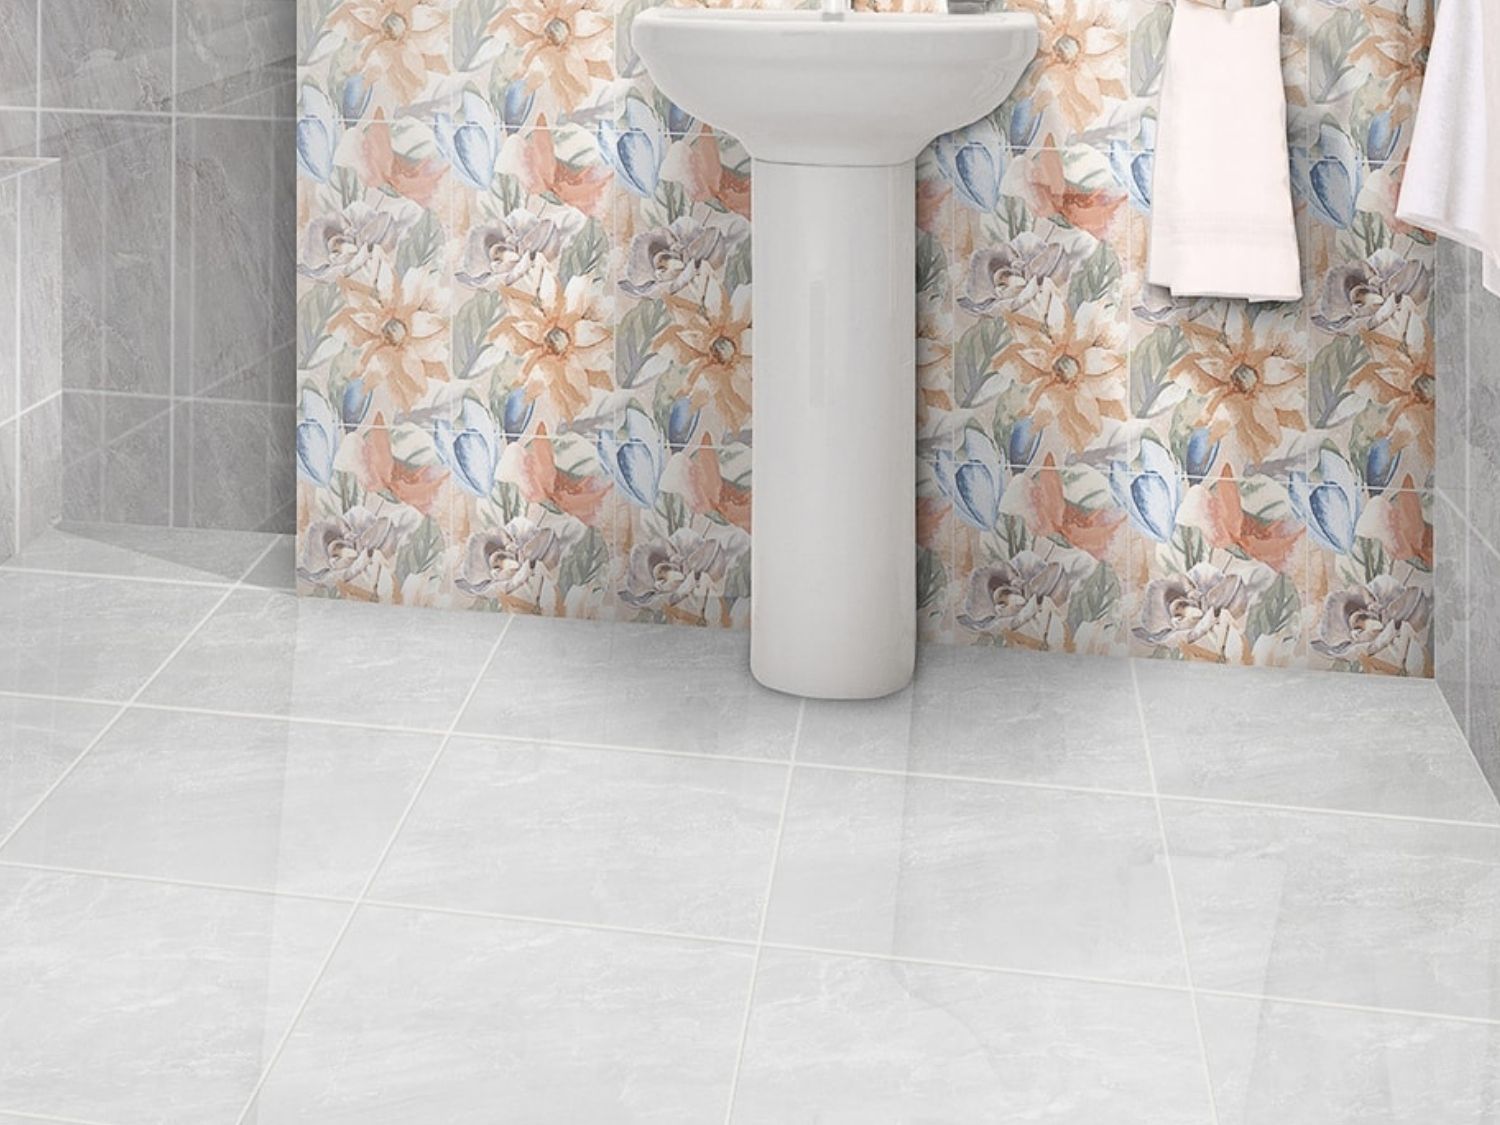 Flores Grey Shiny Ceramic Floor Tile, Which Is Better For Bathroom Ceramic Or Porcelain Tile